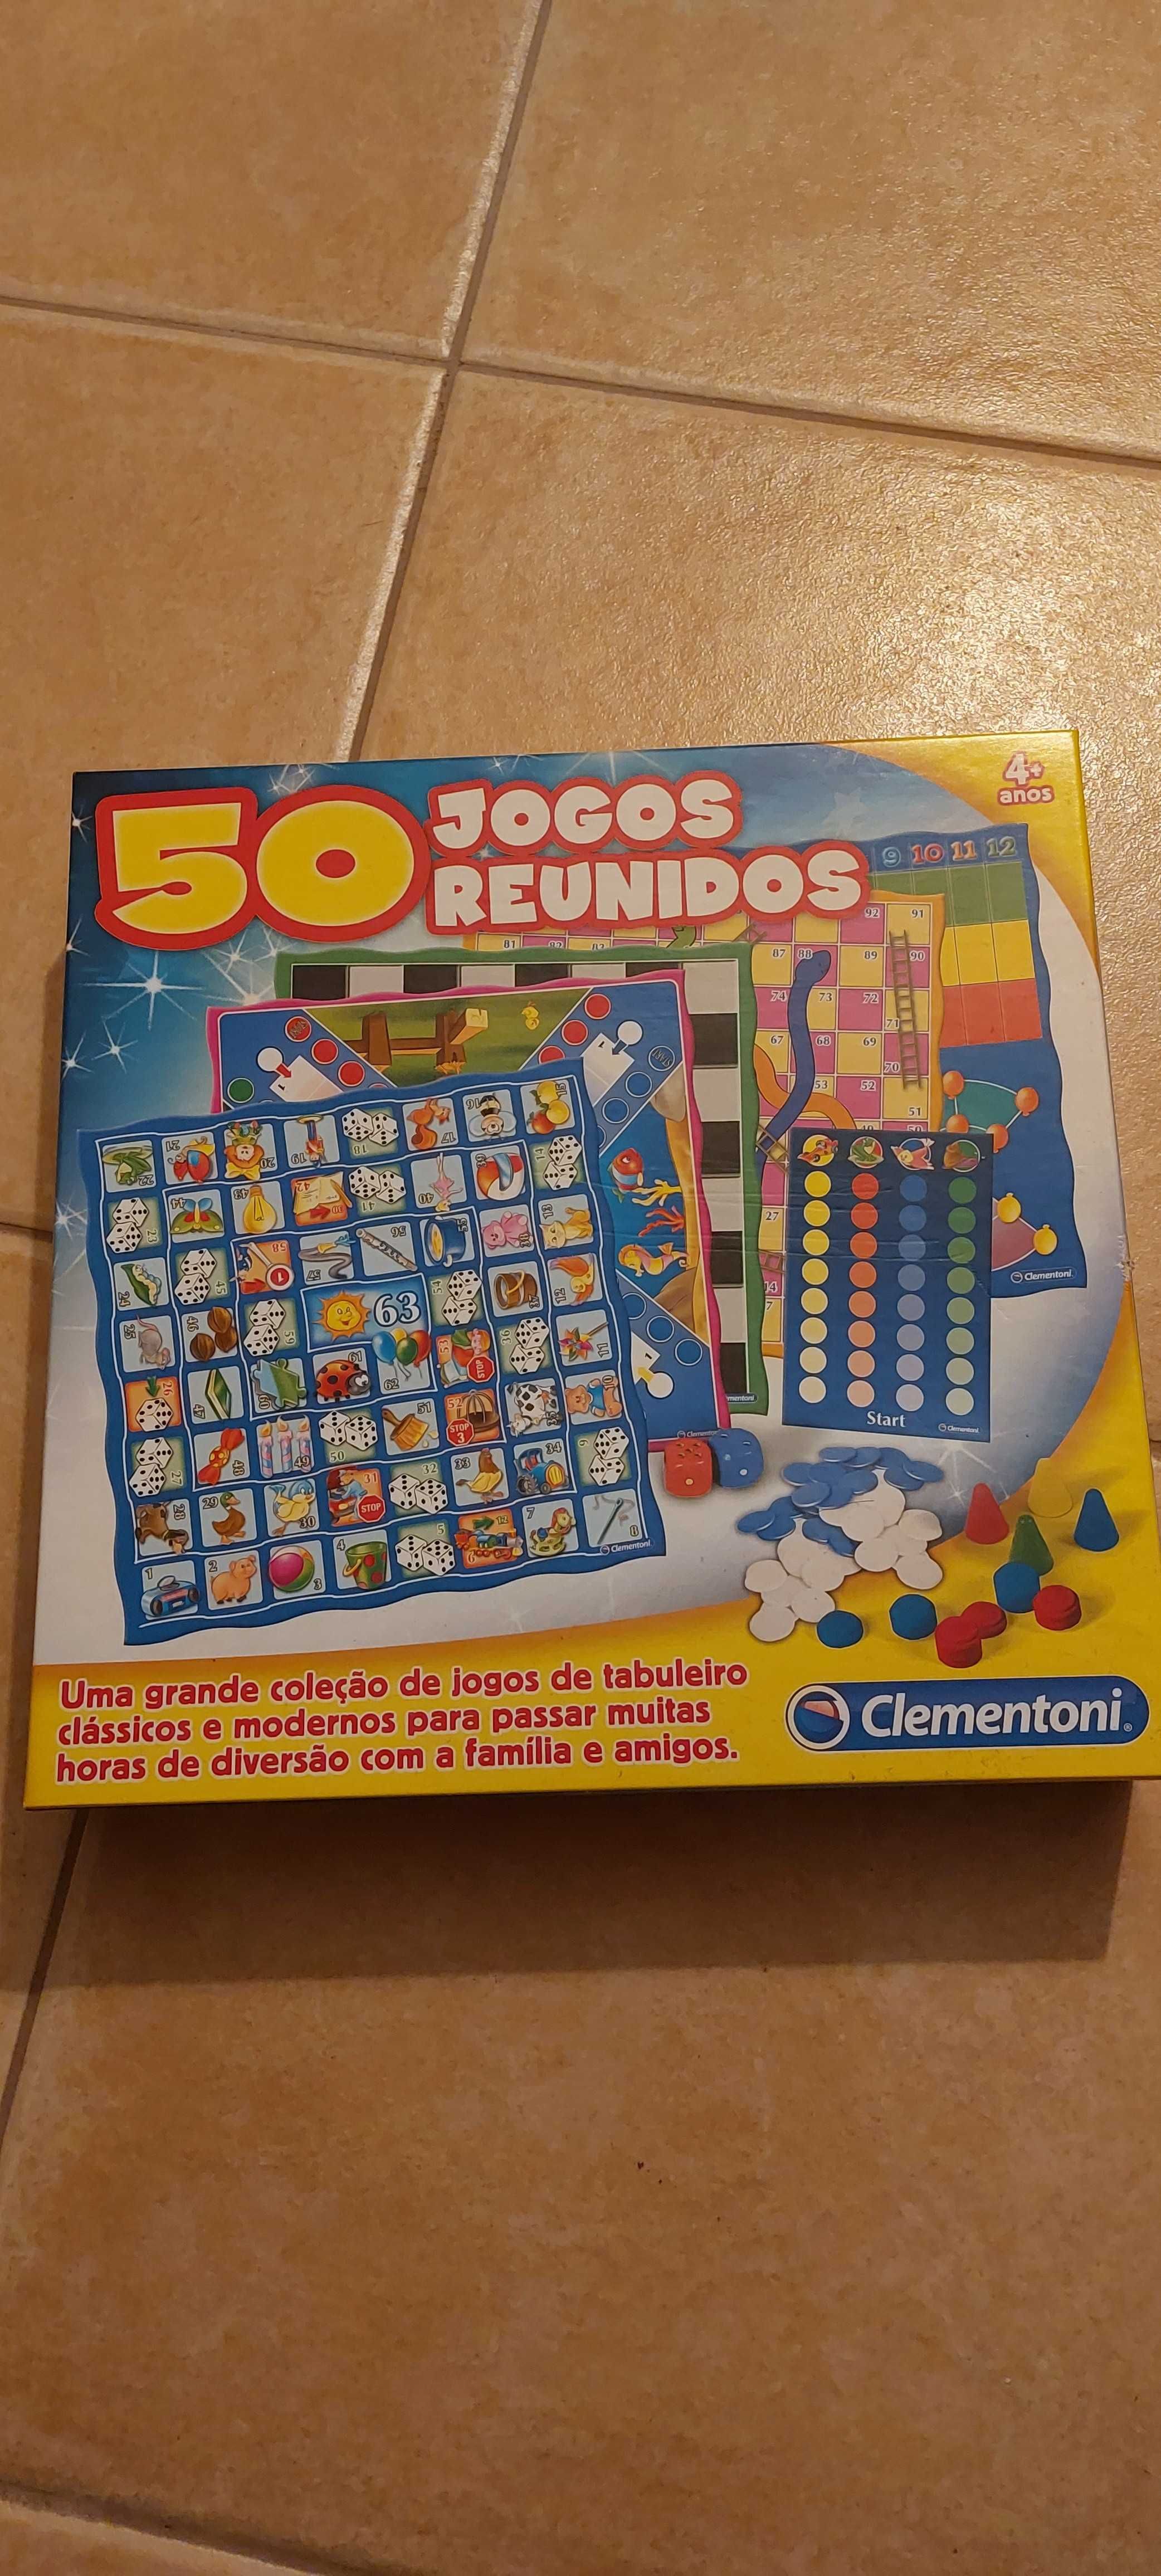 50 jogos reunidos - Clementoni